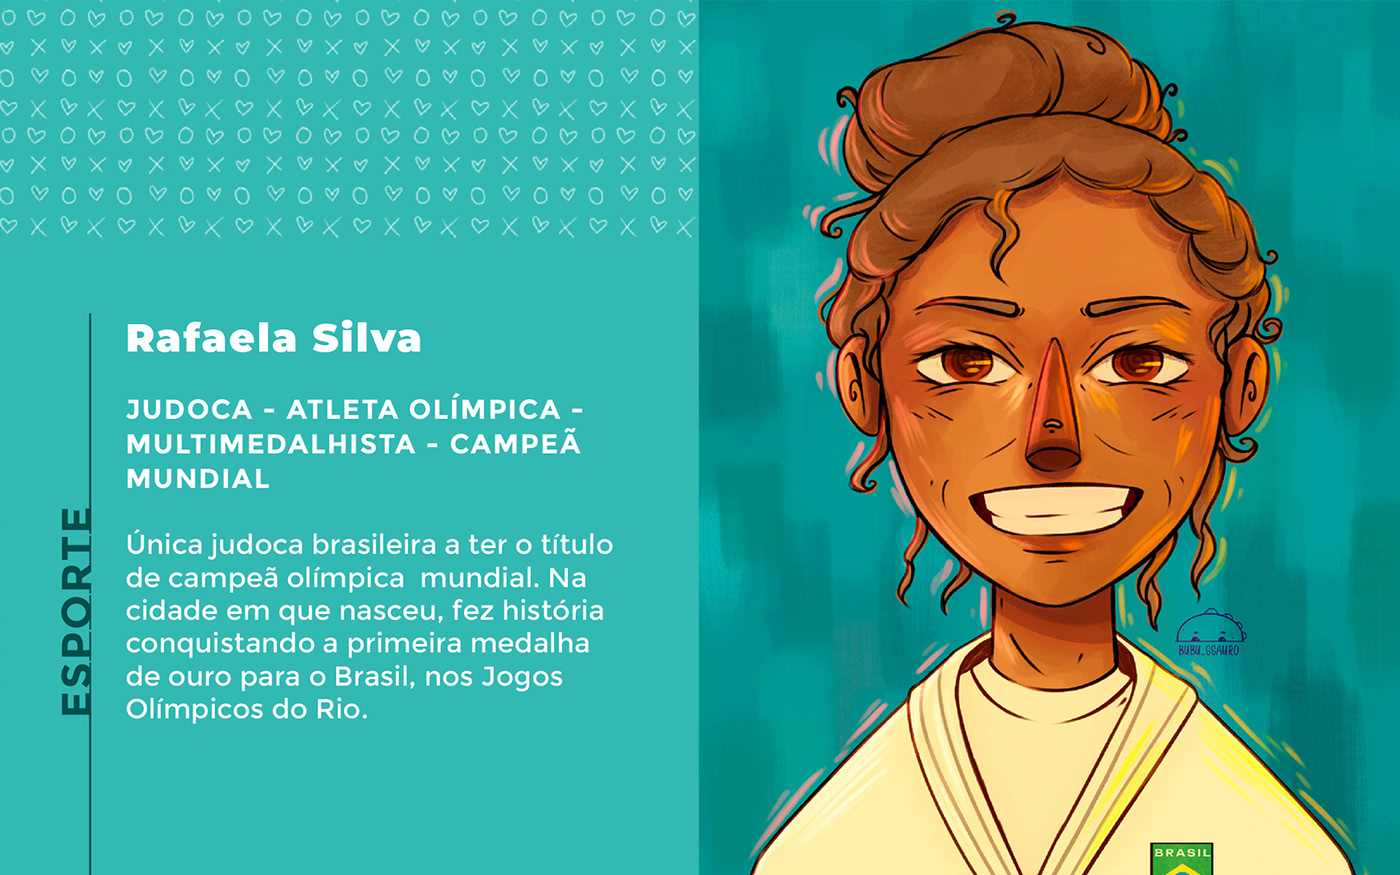 An illustrated portrait of Rafaela Silva, a brazilian world champion judoka.